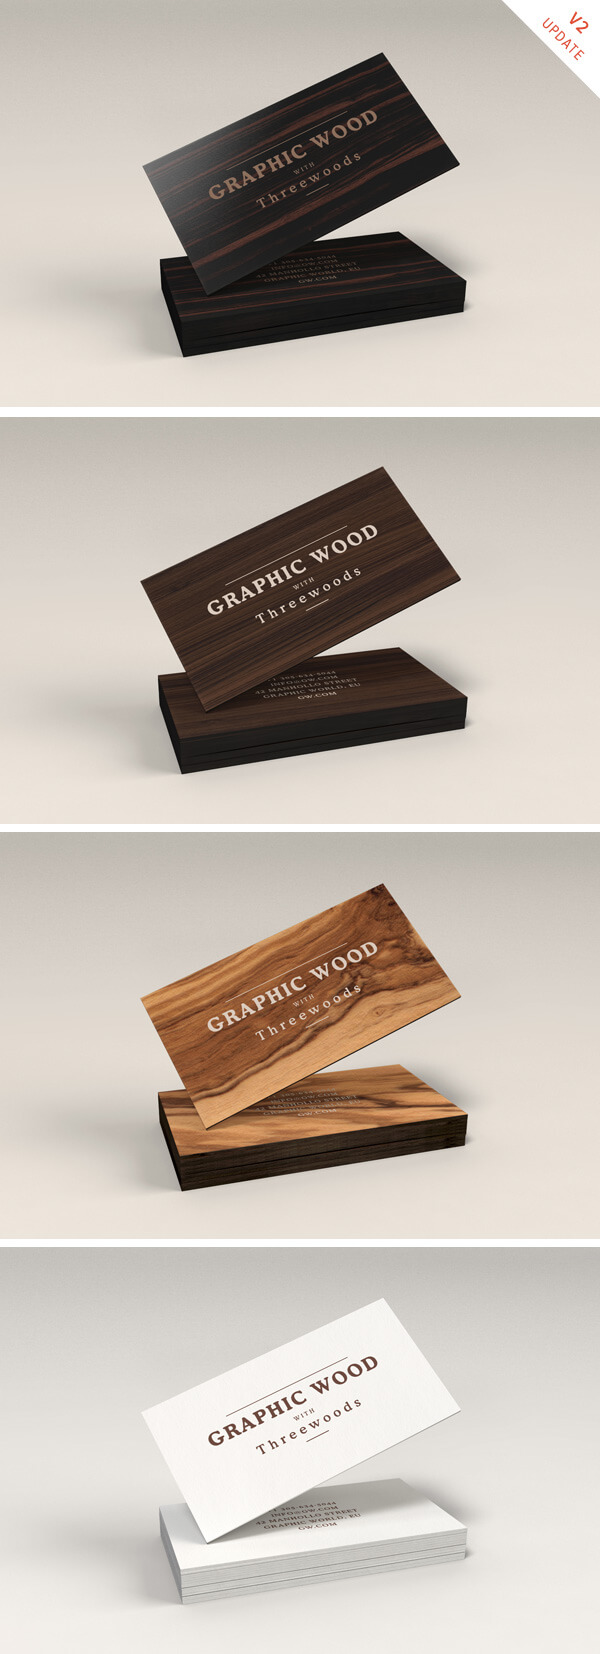 Wooden Business Card MockUps